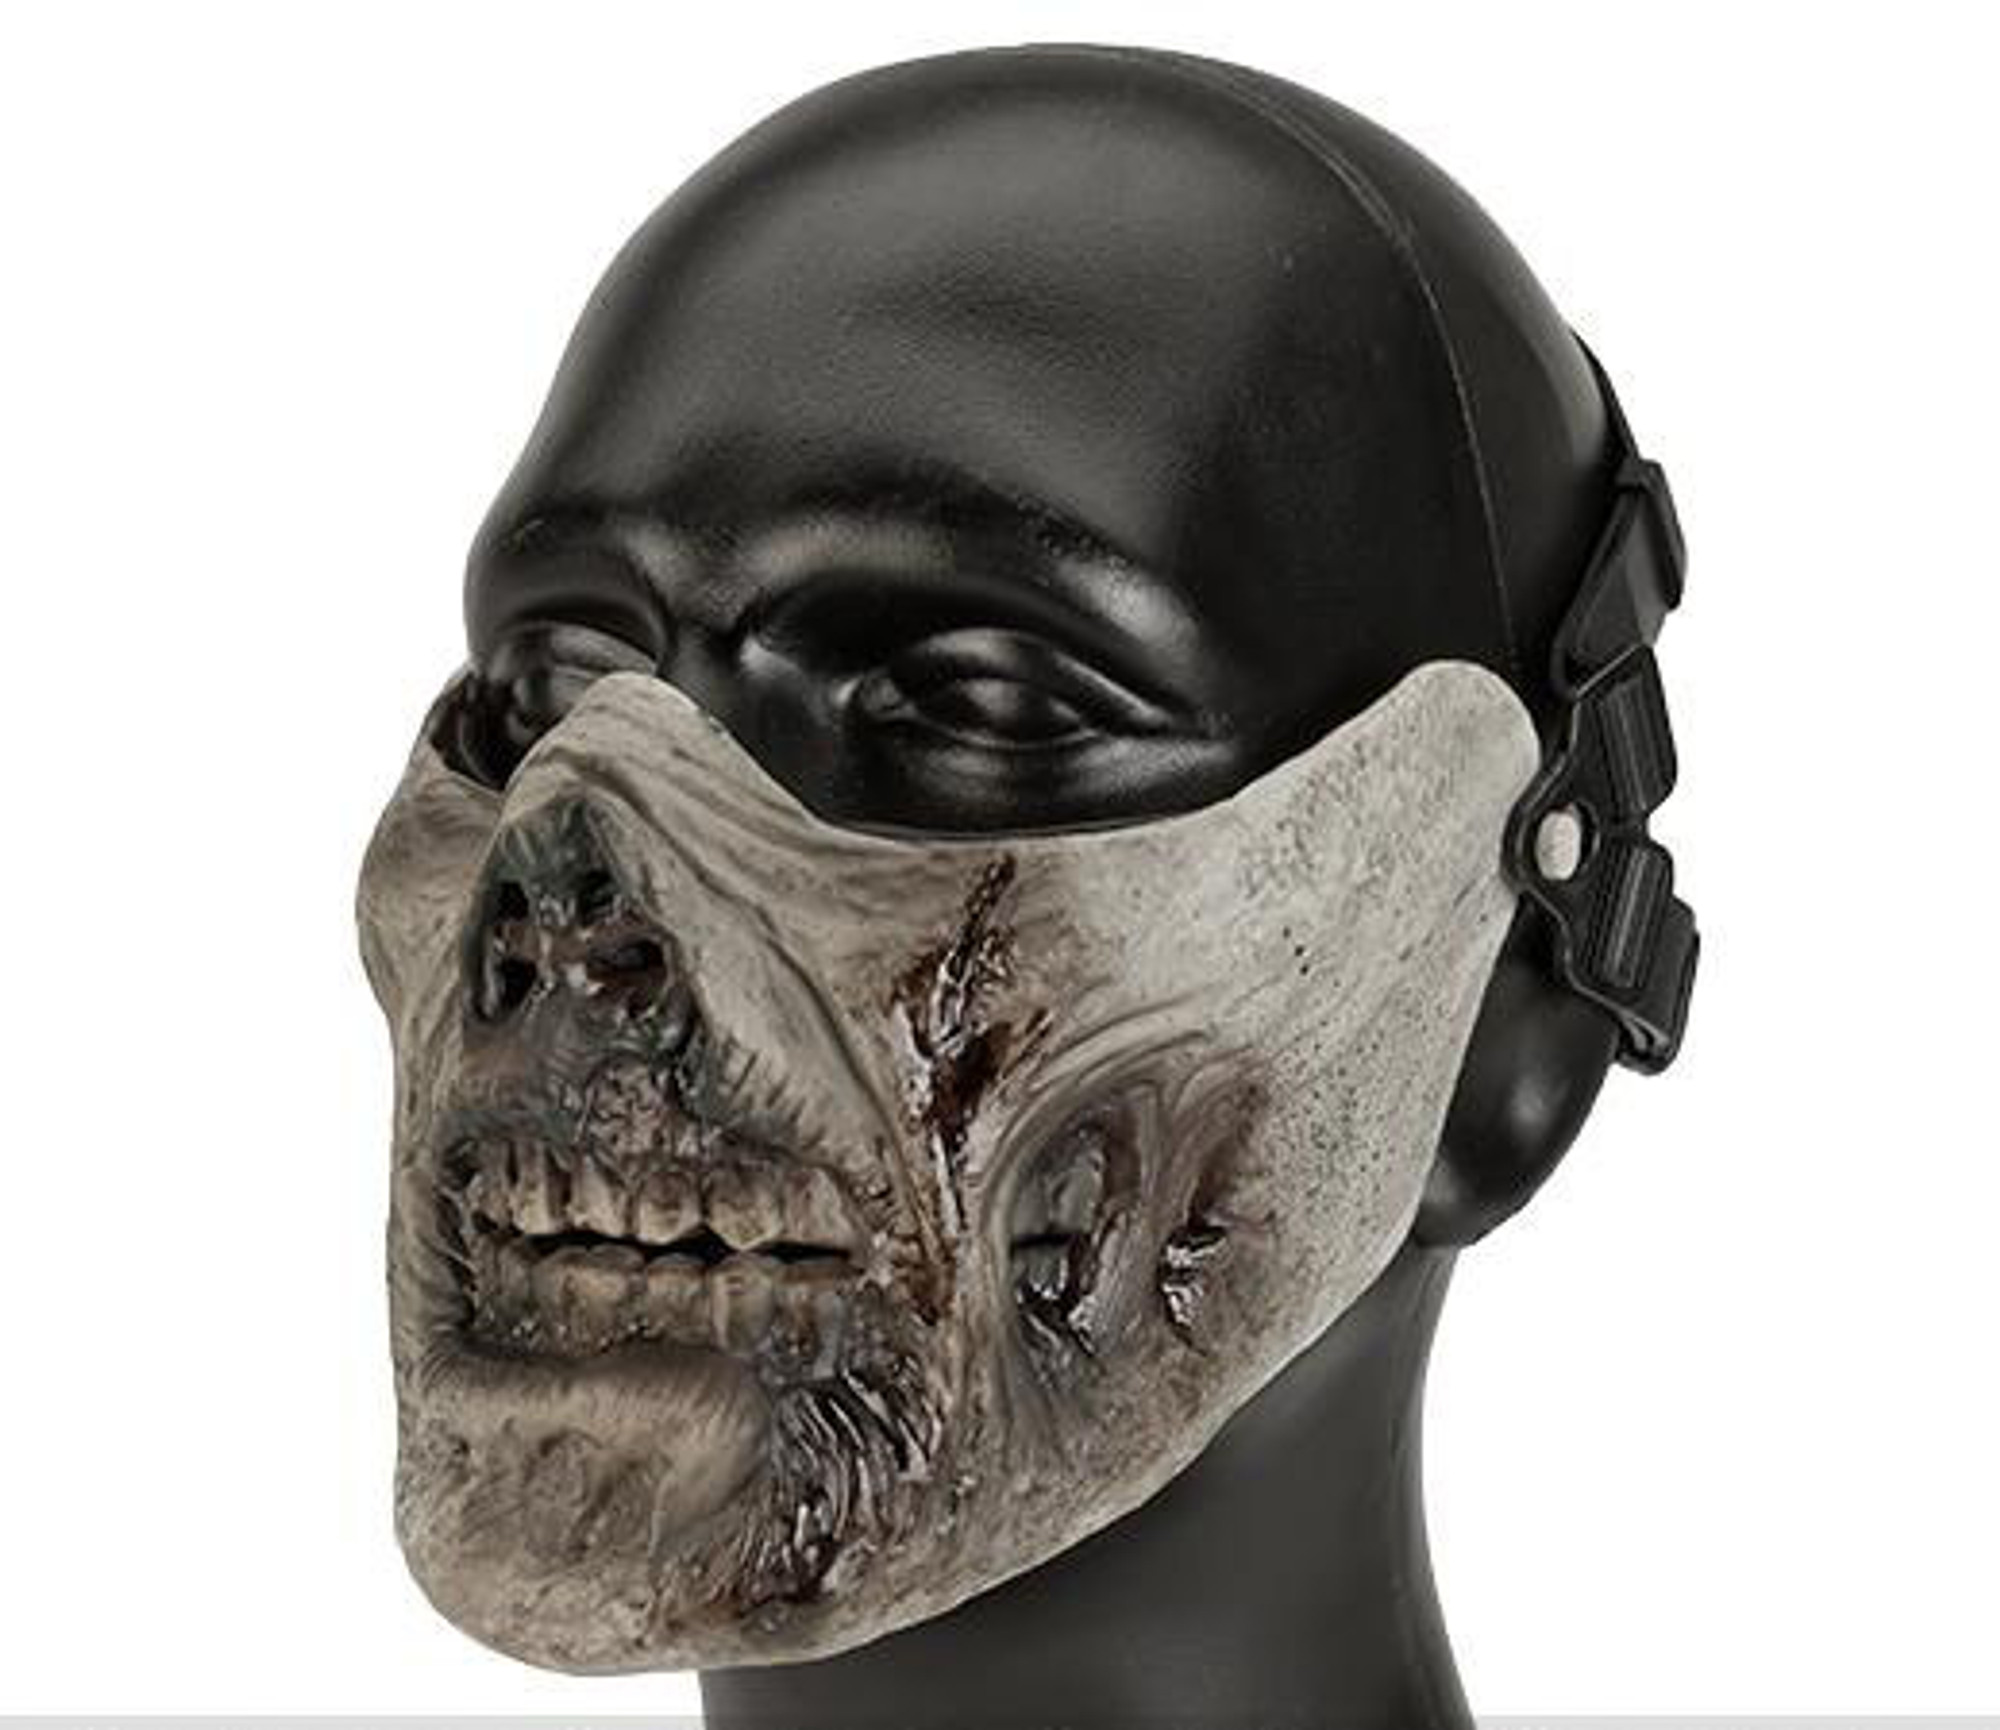 Avengers "Zombie" Iron Face Lower Half Mask - Rotting Flesh